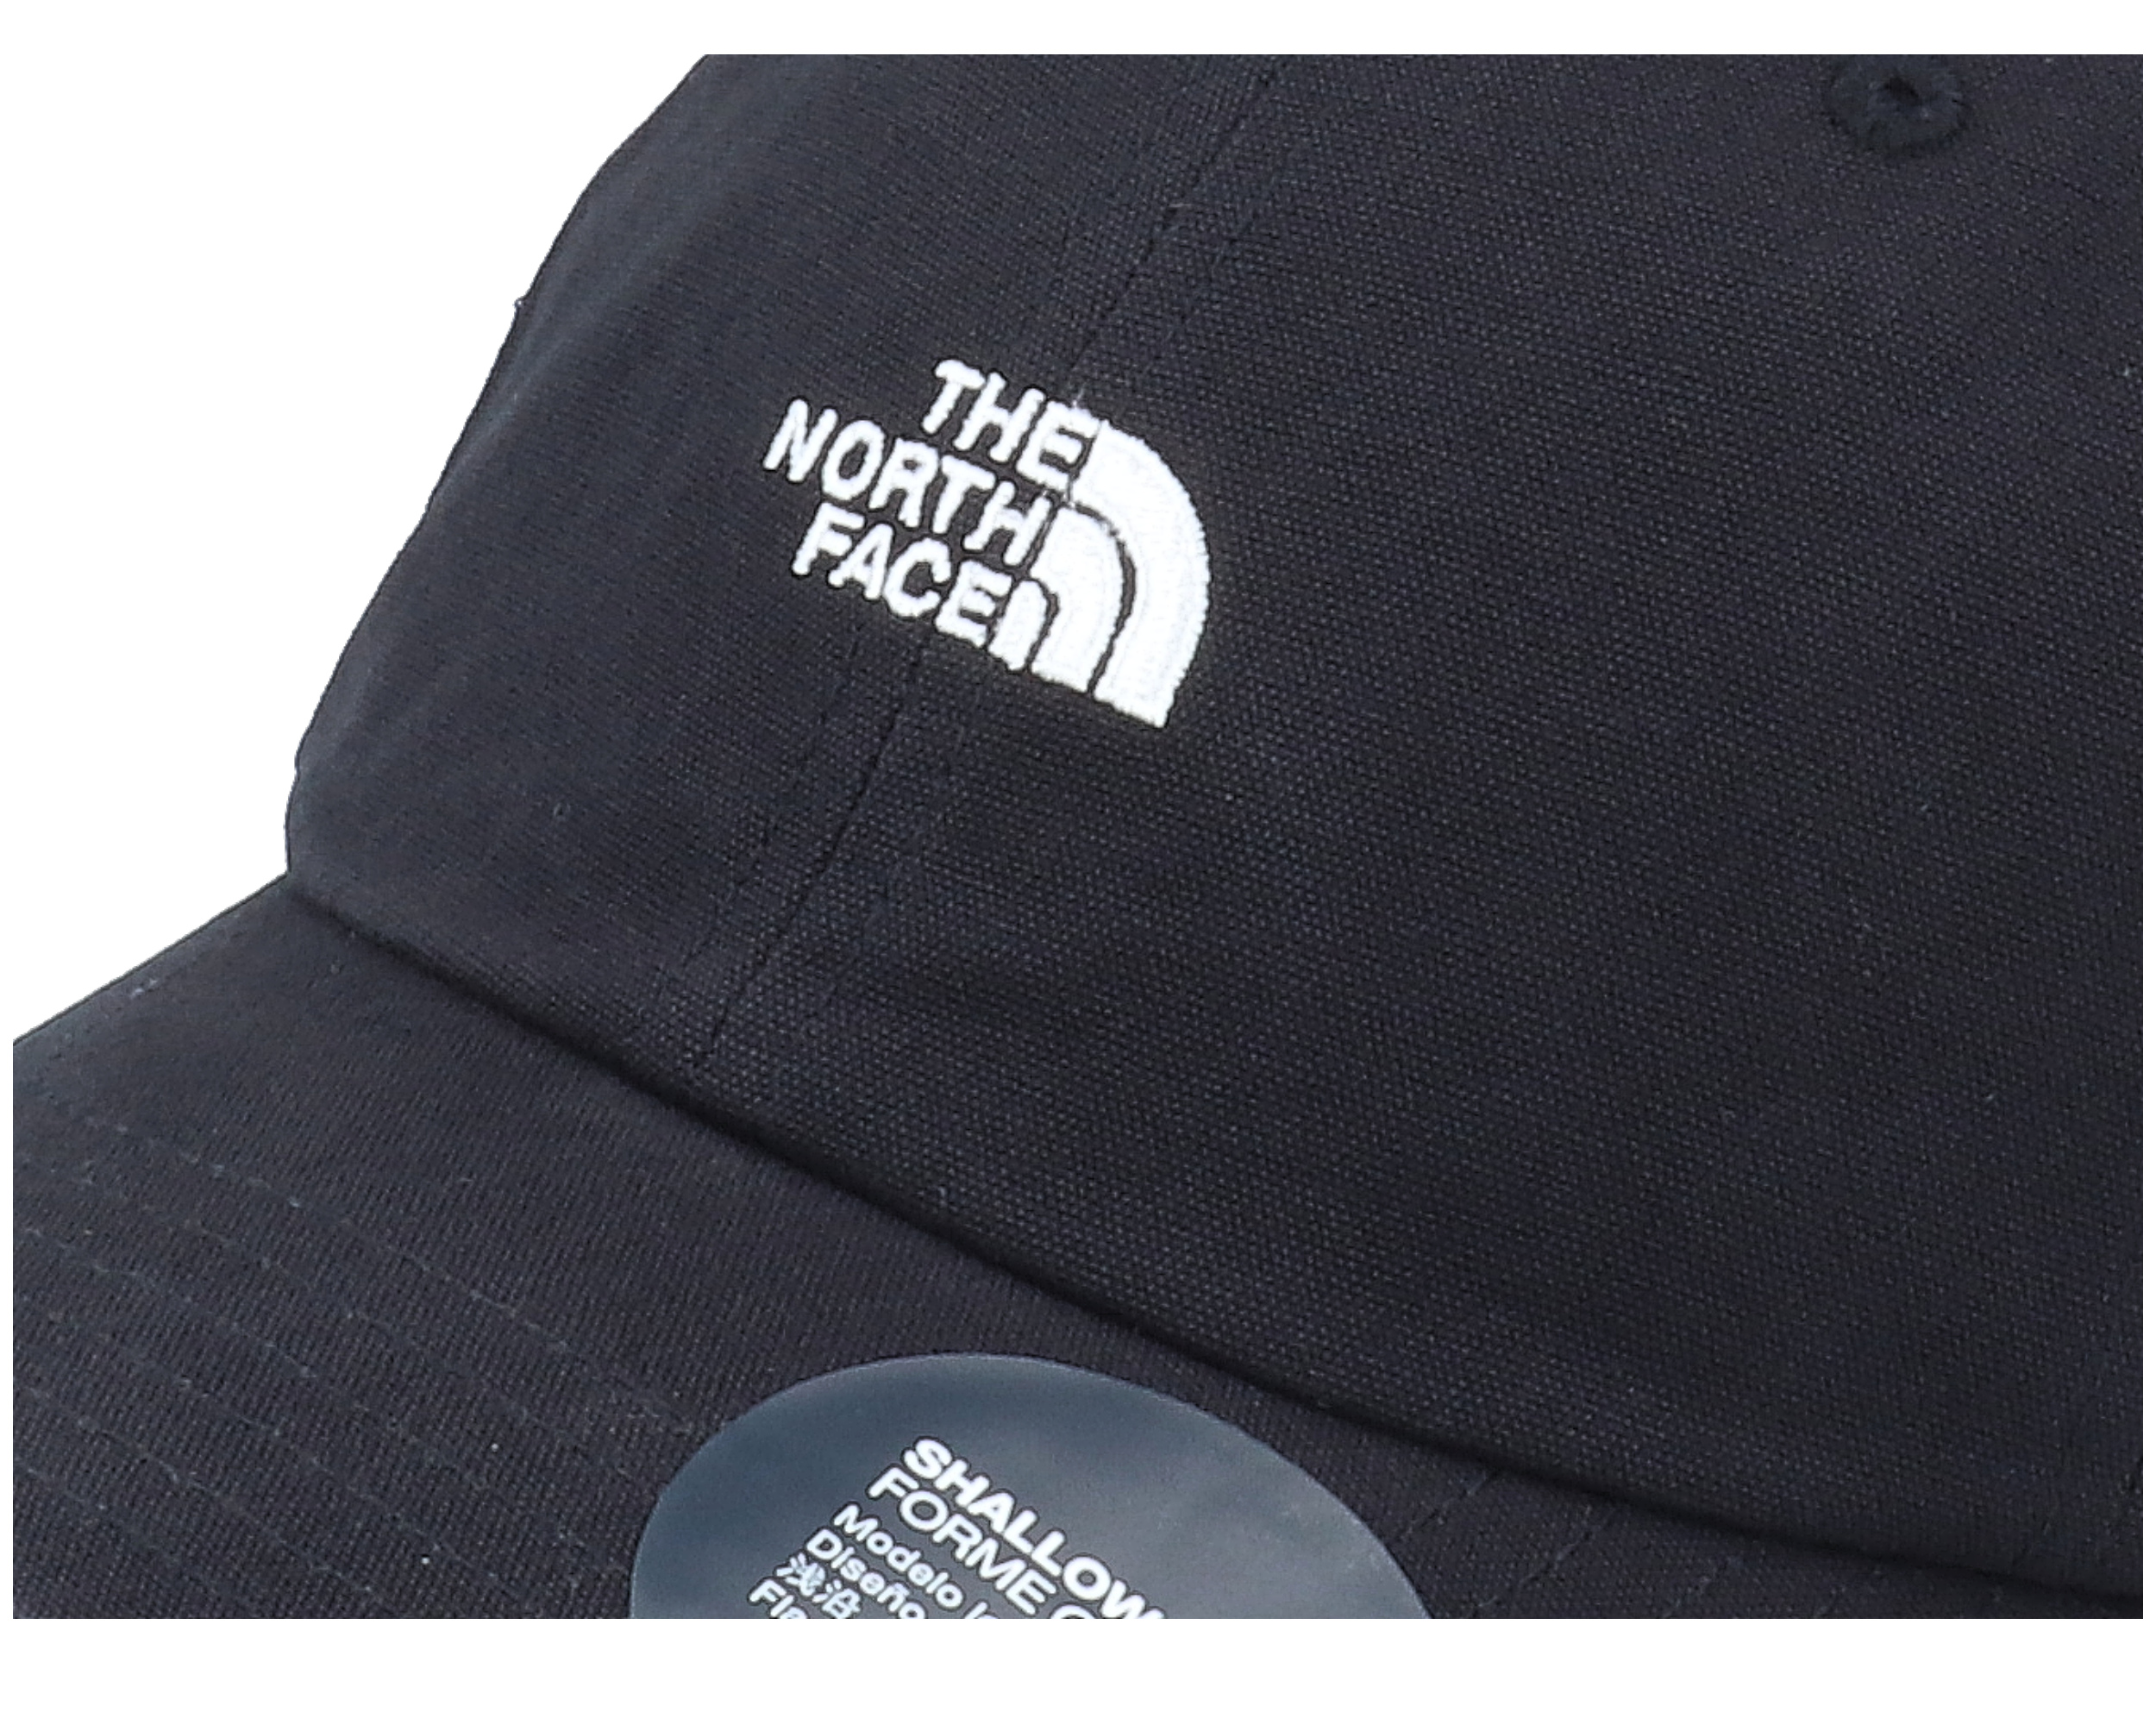 Washed Norm Hat Black Dad Cap - The North Face keps - Hatstore.se